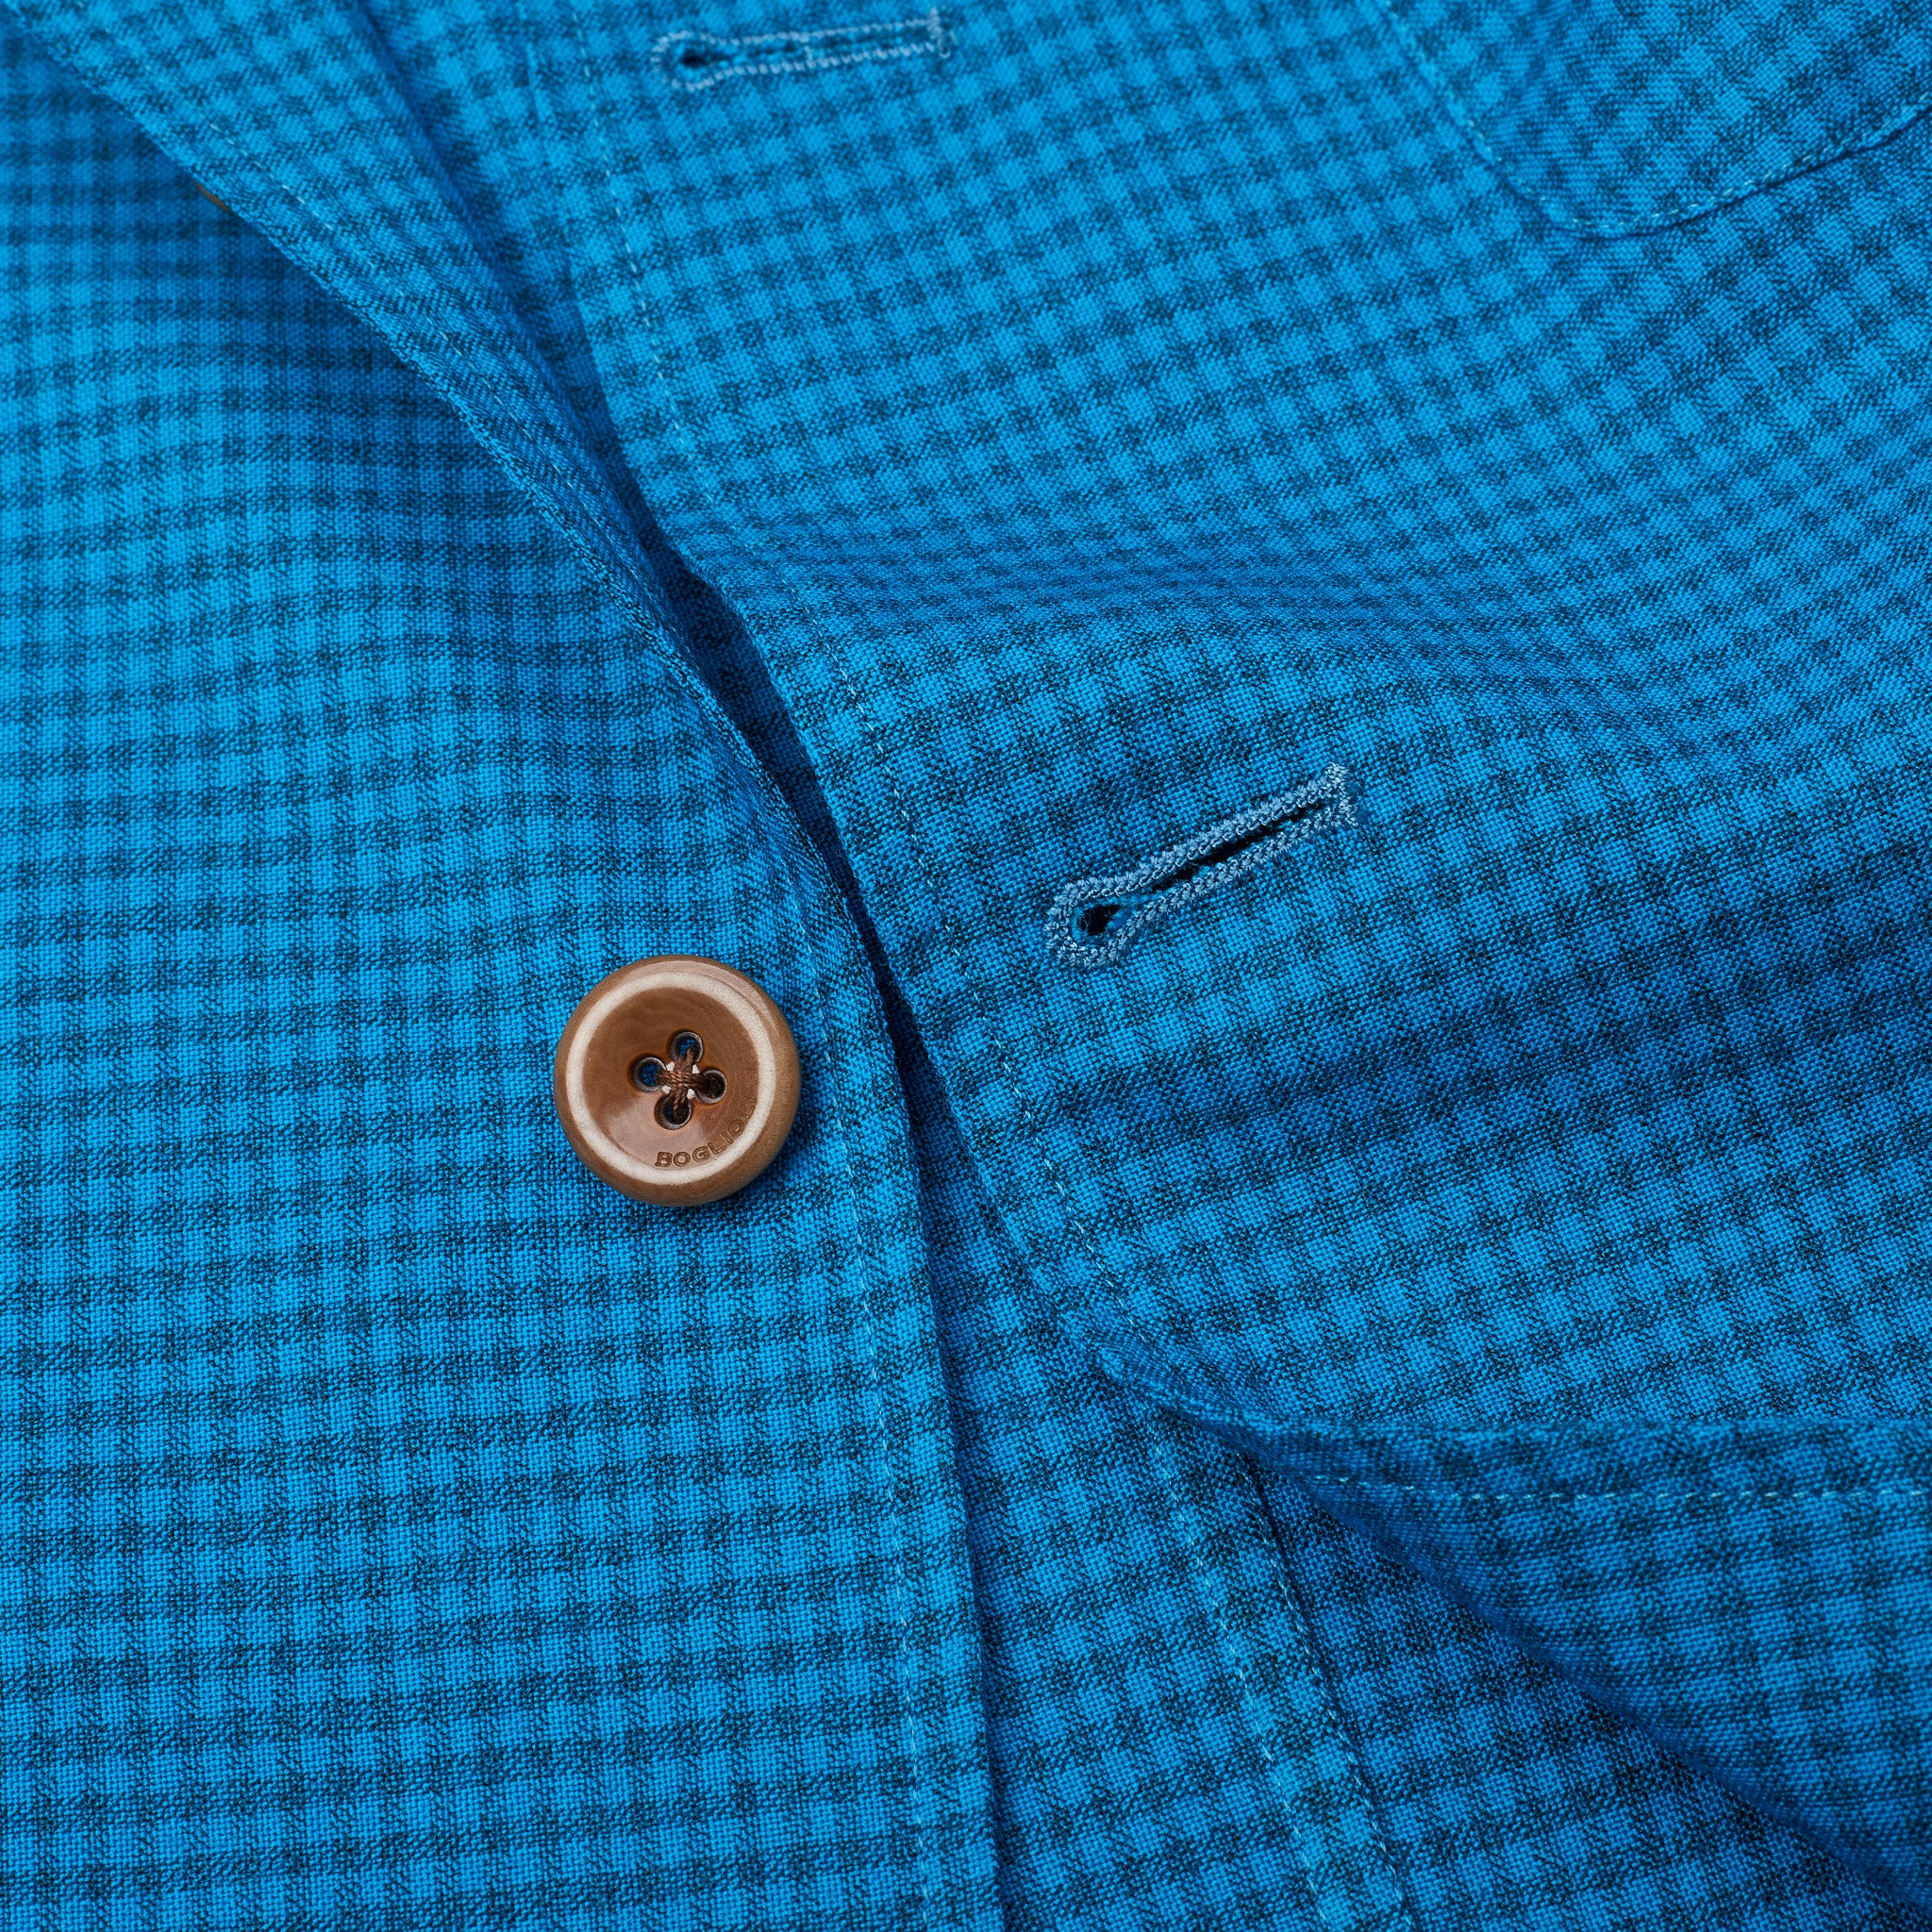 BOGLIOLI Galleria "72" Blue Checkered Unlined Wool Unconstructed Jacket NEW BOGLIOLI